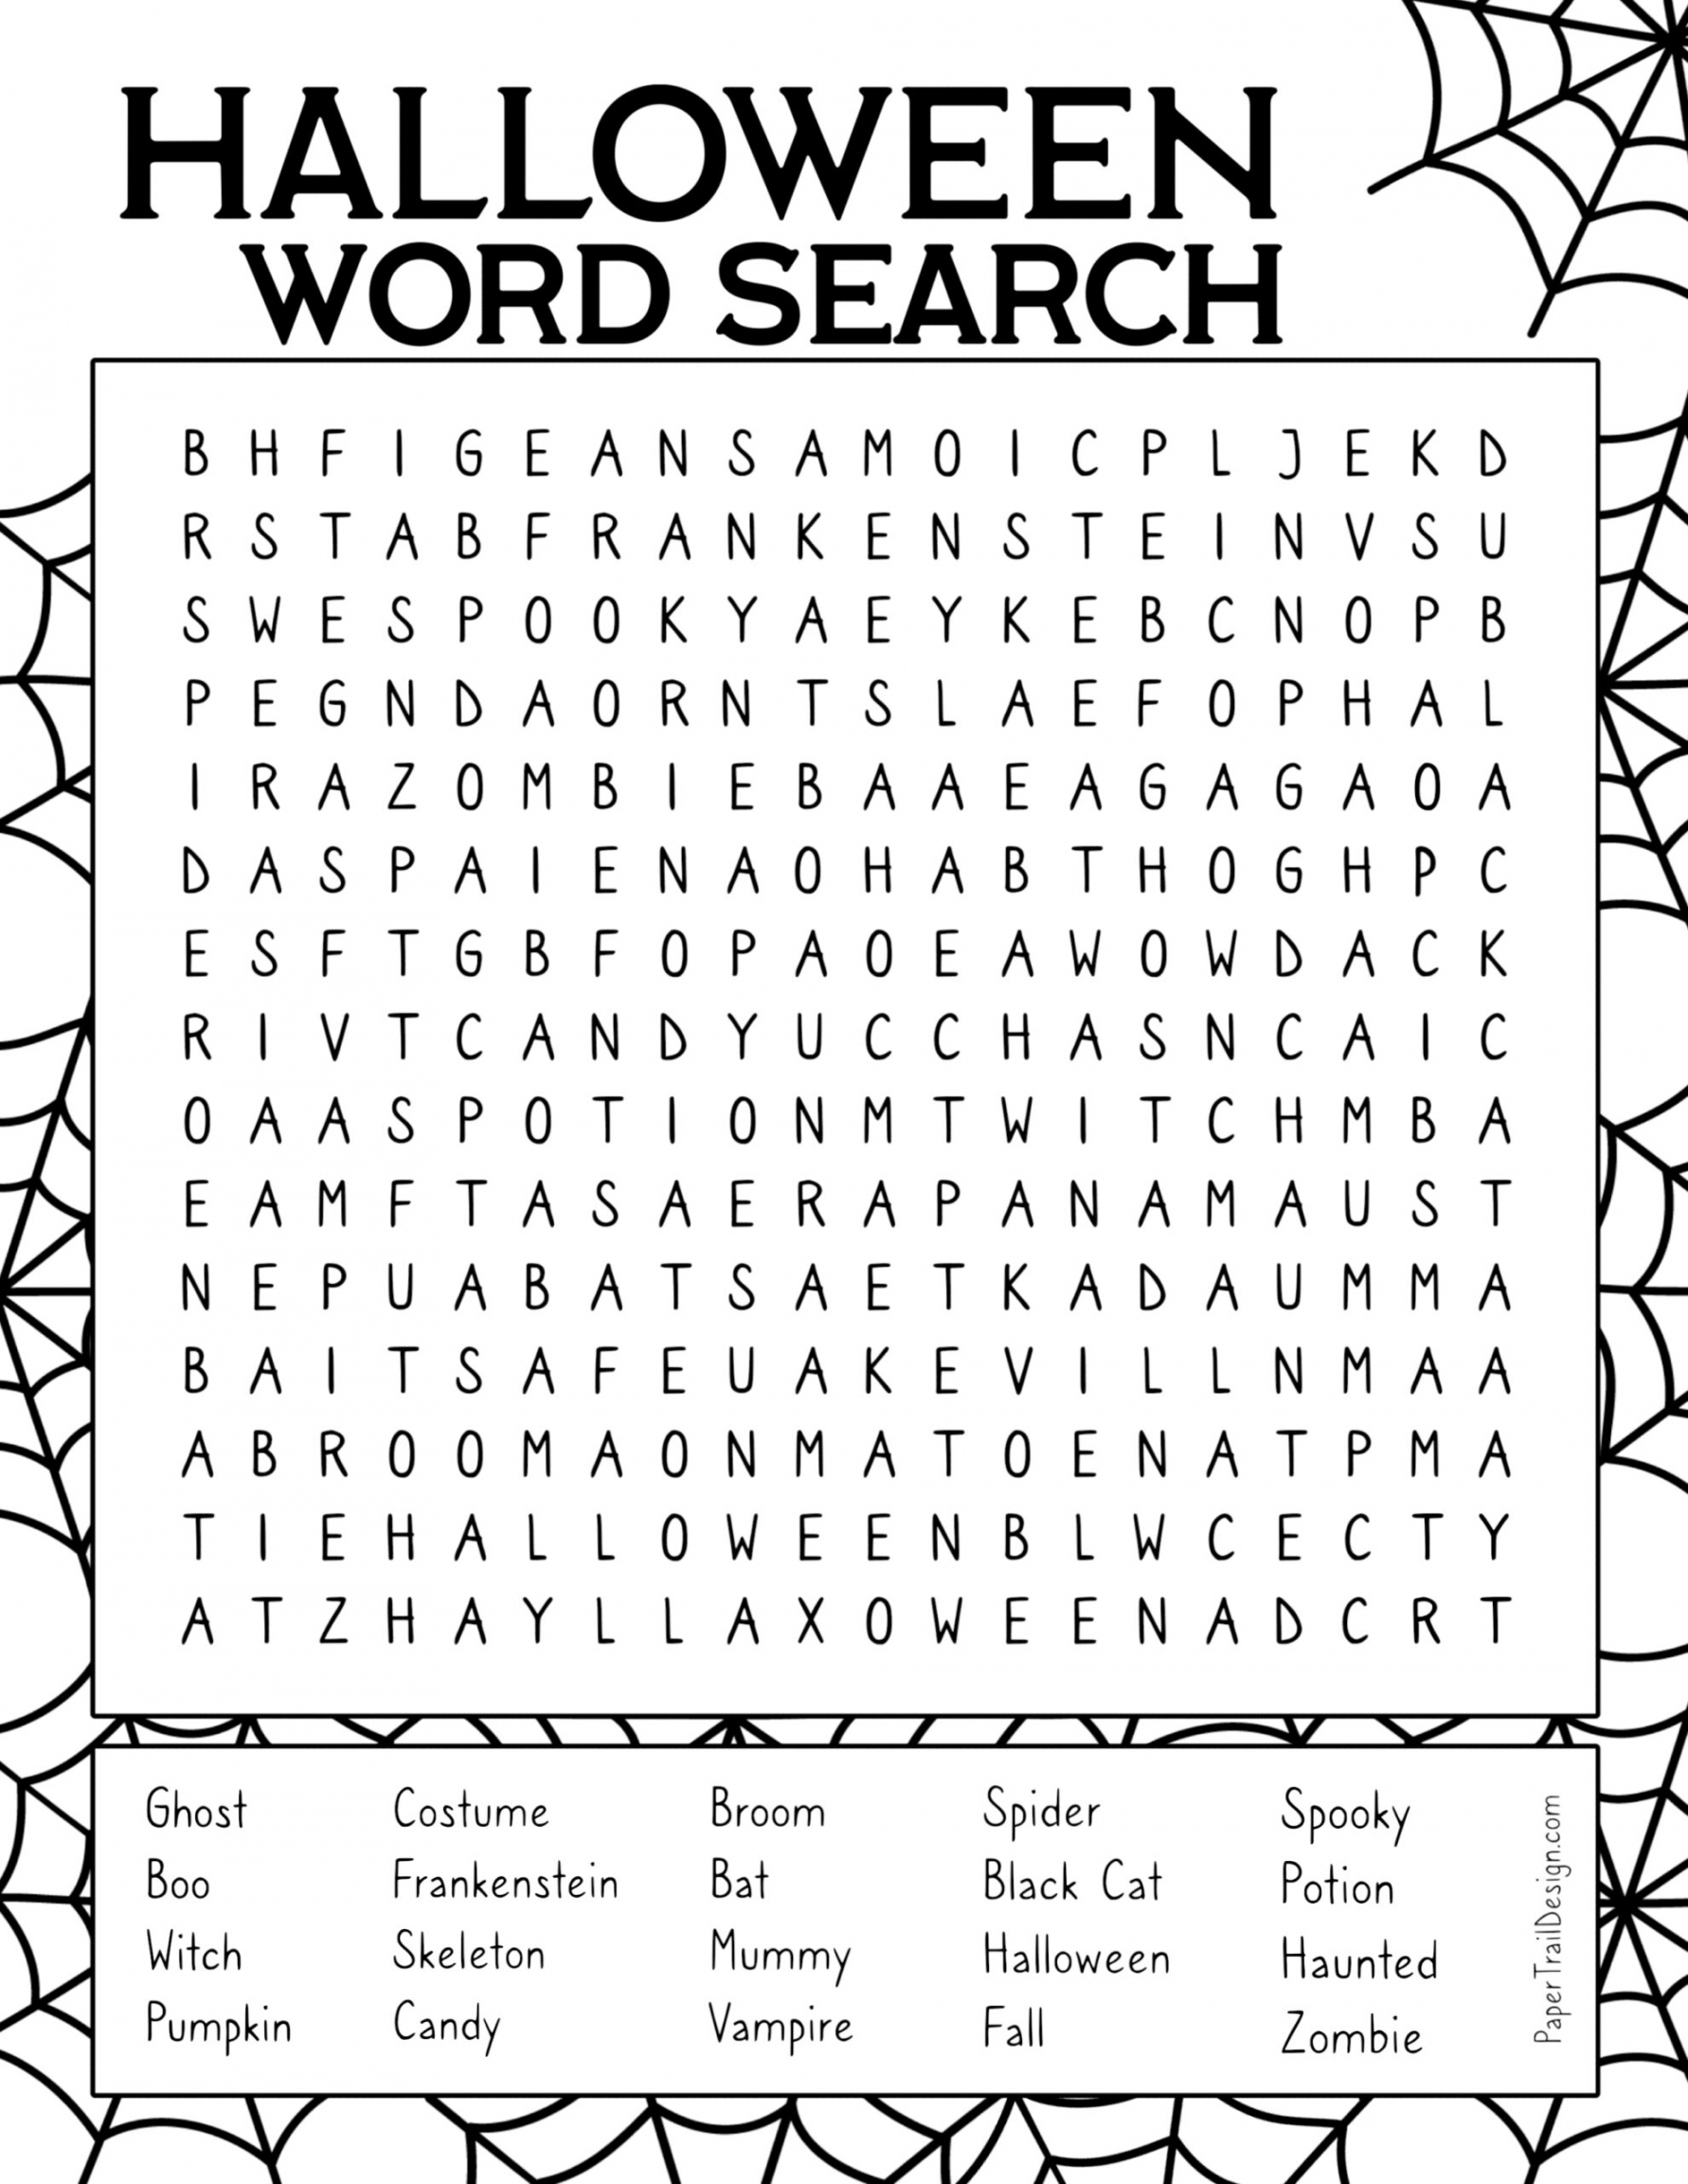 Free Halloween Word Search Printable - Printable - Free Printable Halloween Word Search - Paper Trail Design